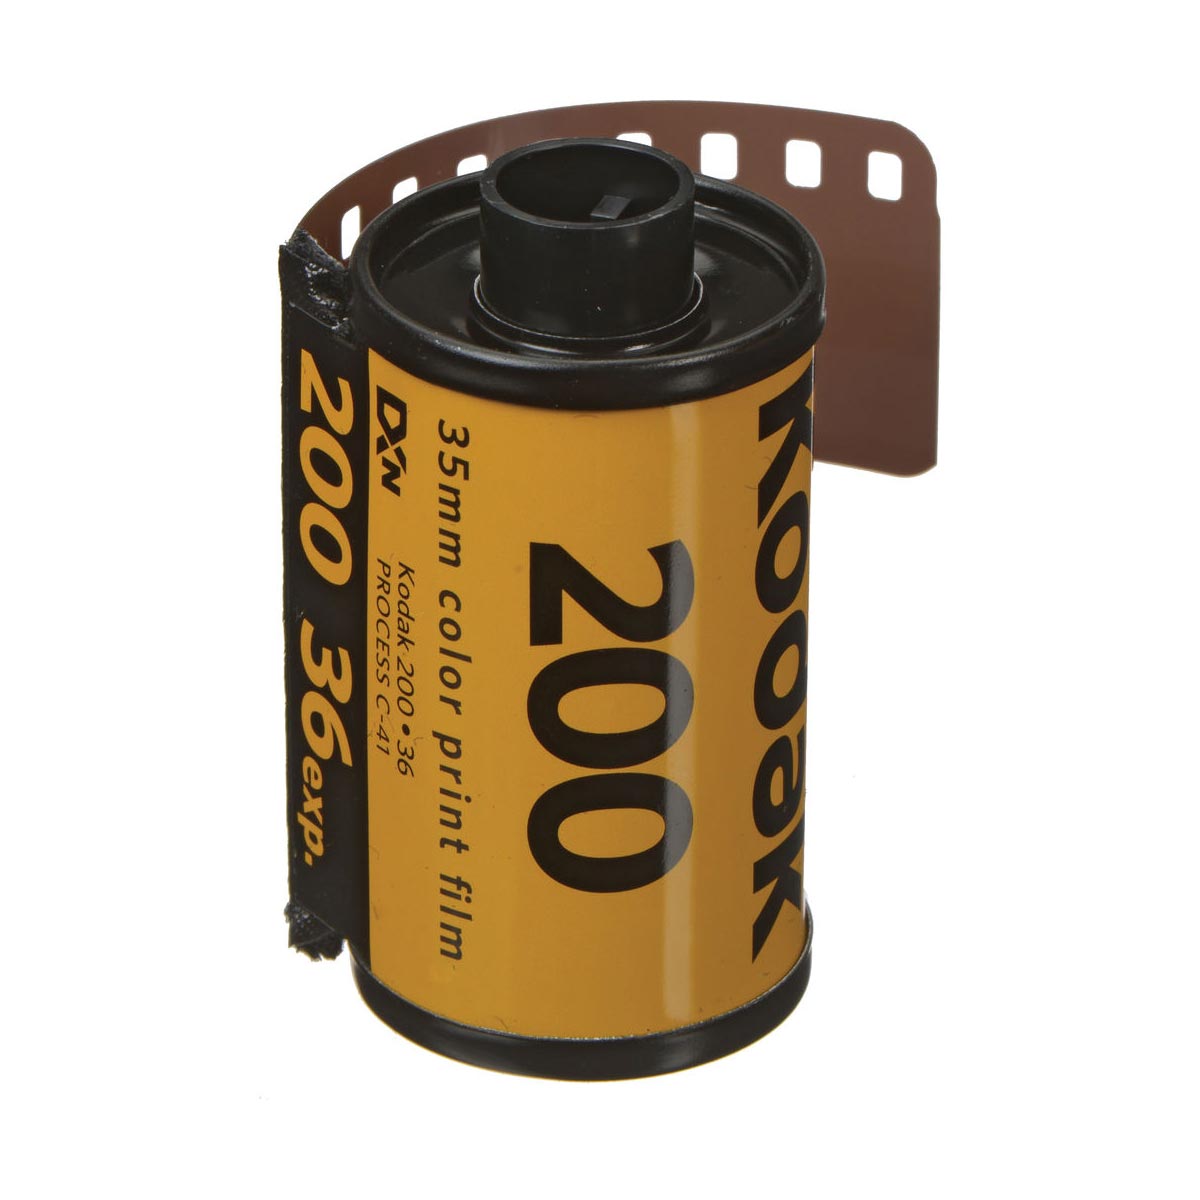 Kodak Gold 200 135-36 Color Neg. Film (One Roll)